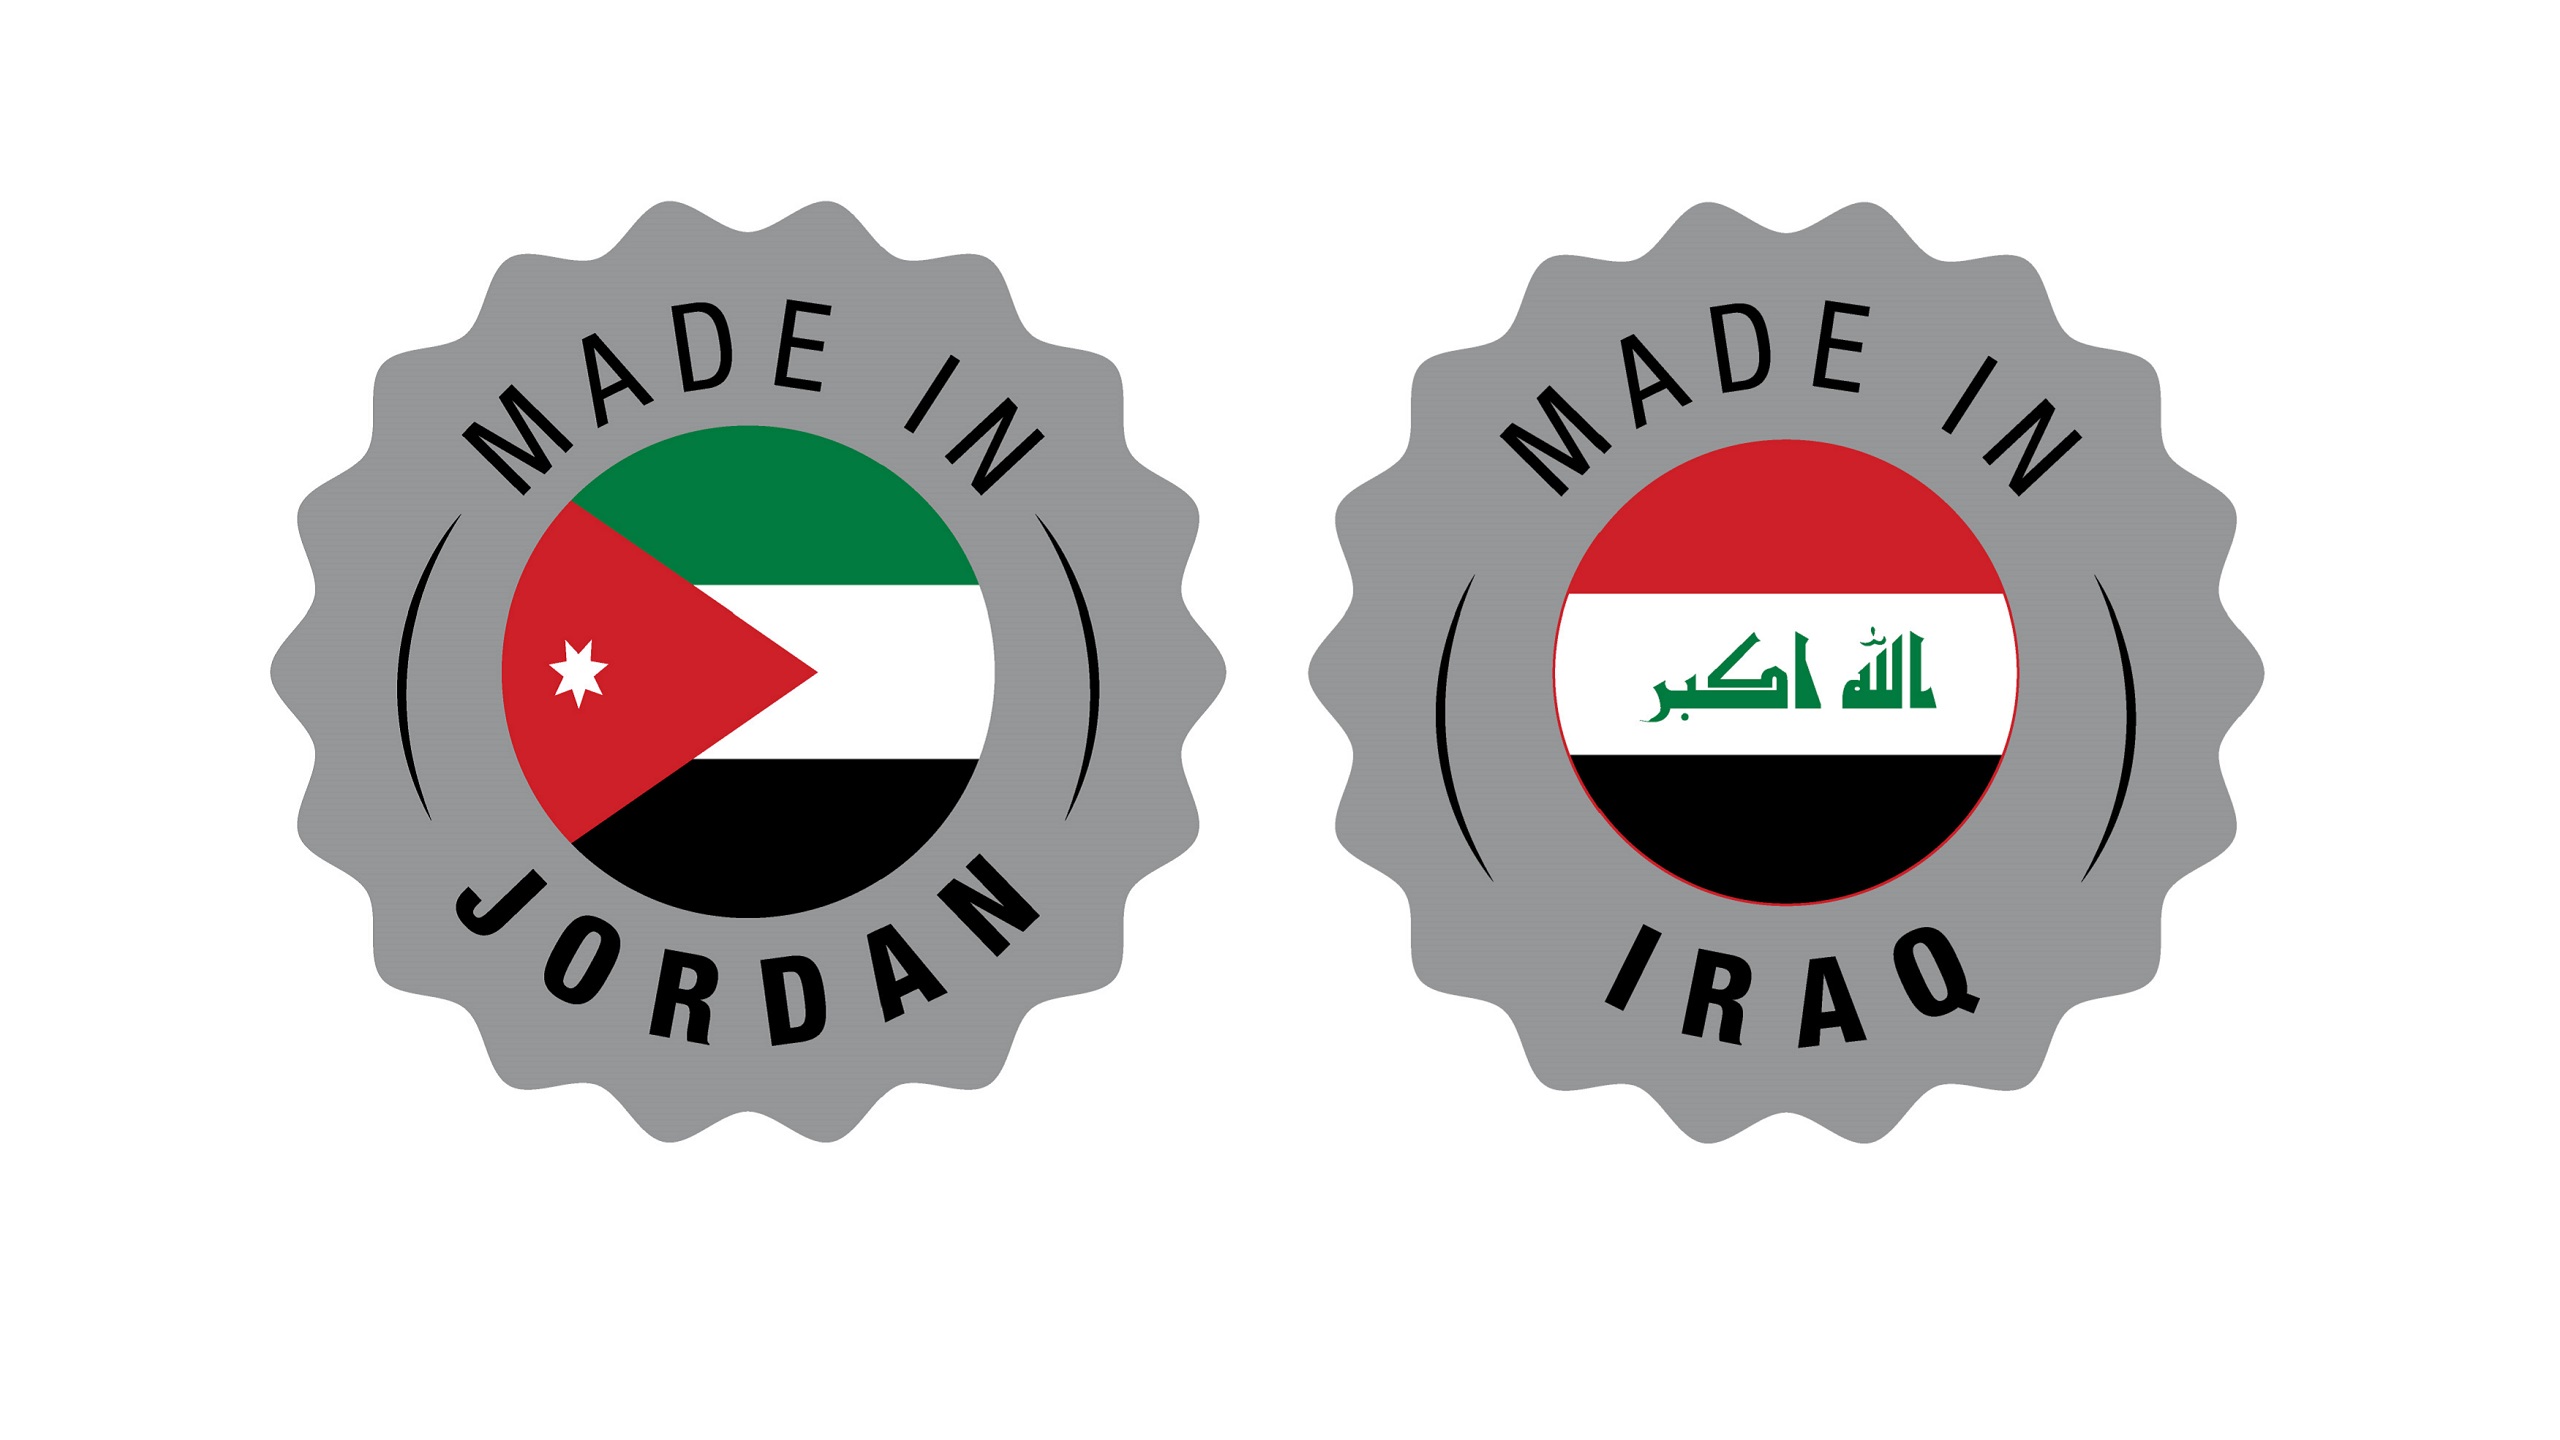 Jordan, Iraq Invite Bids To Build Joint Economic City on Their Border